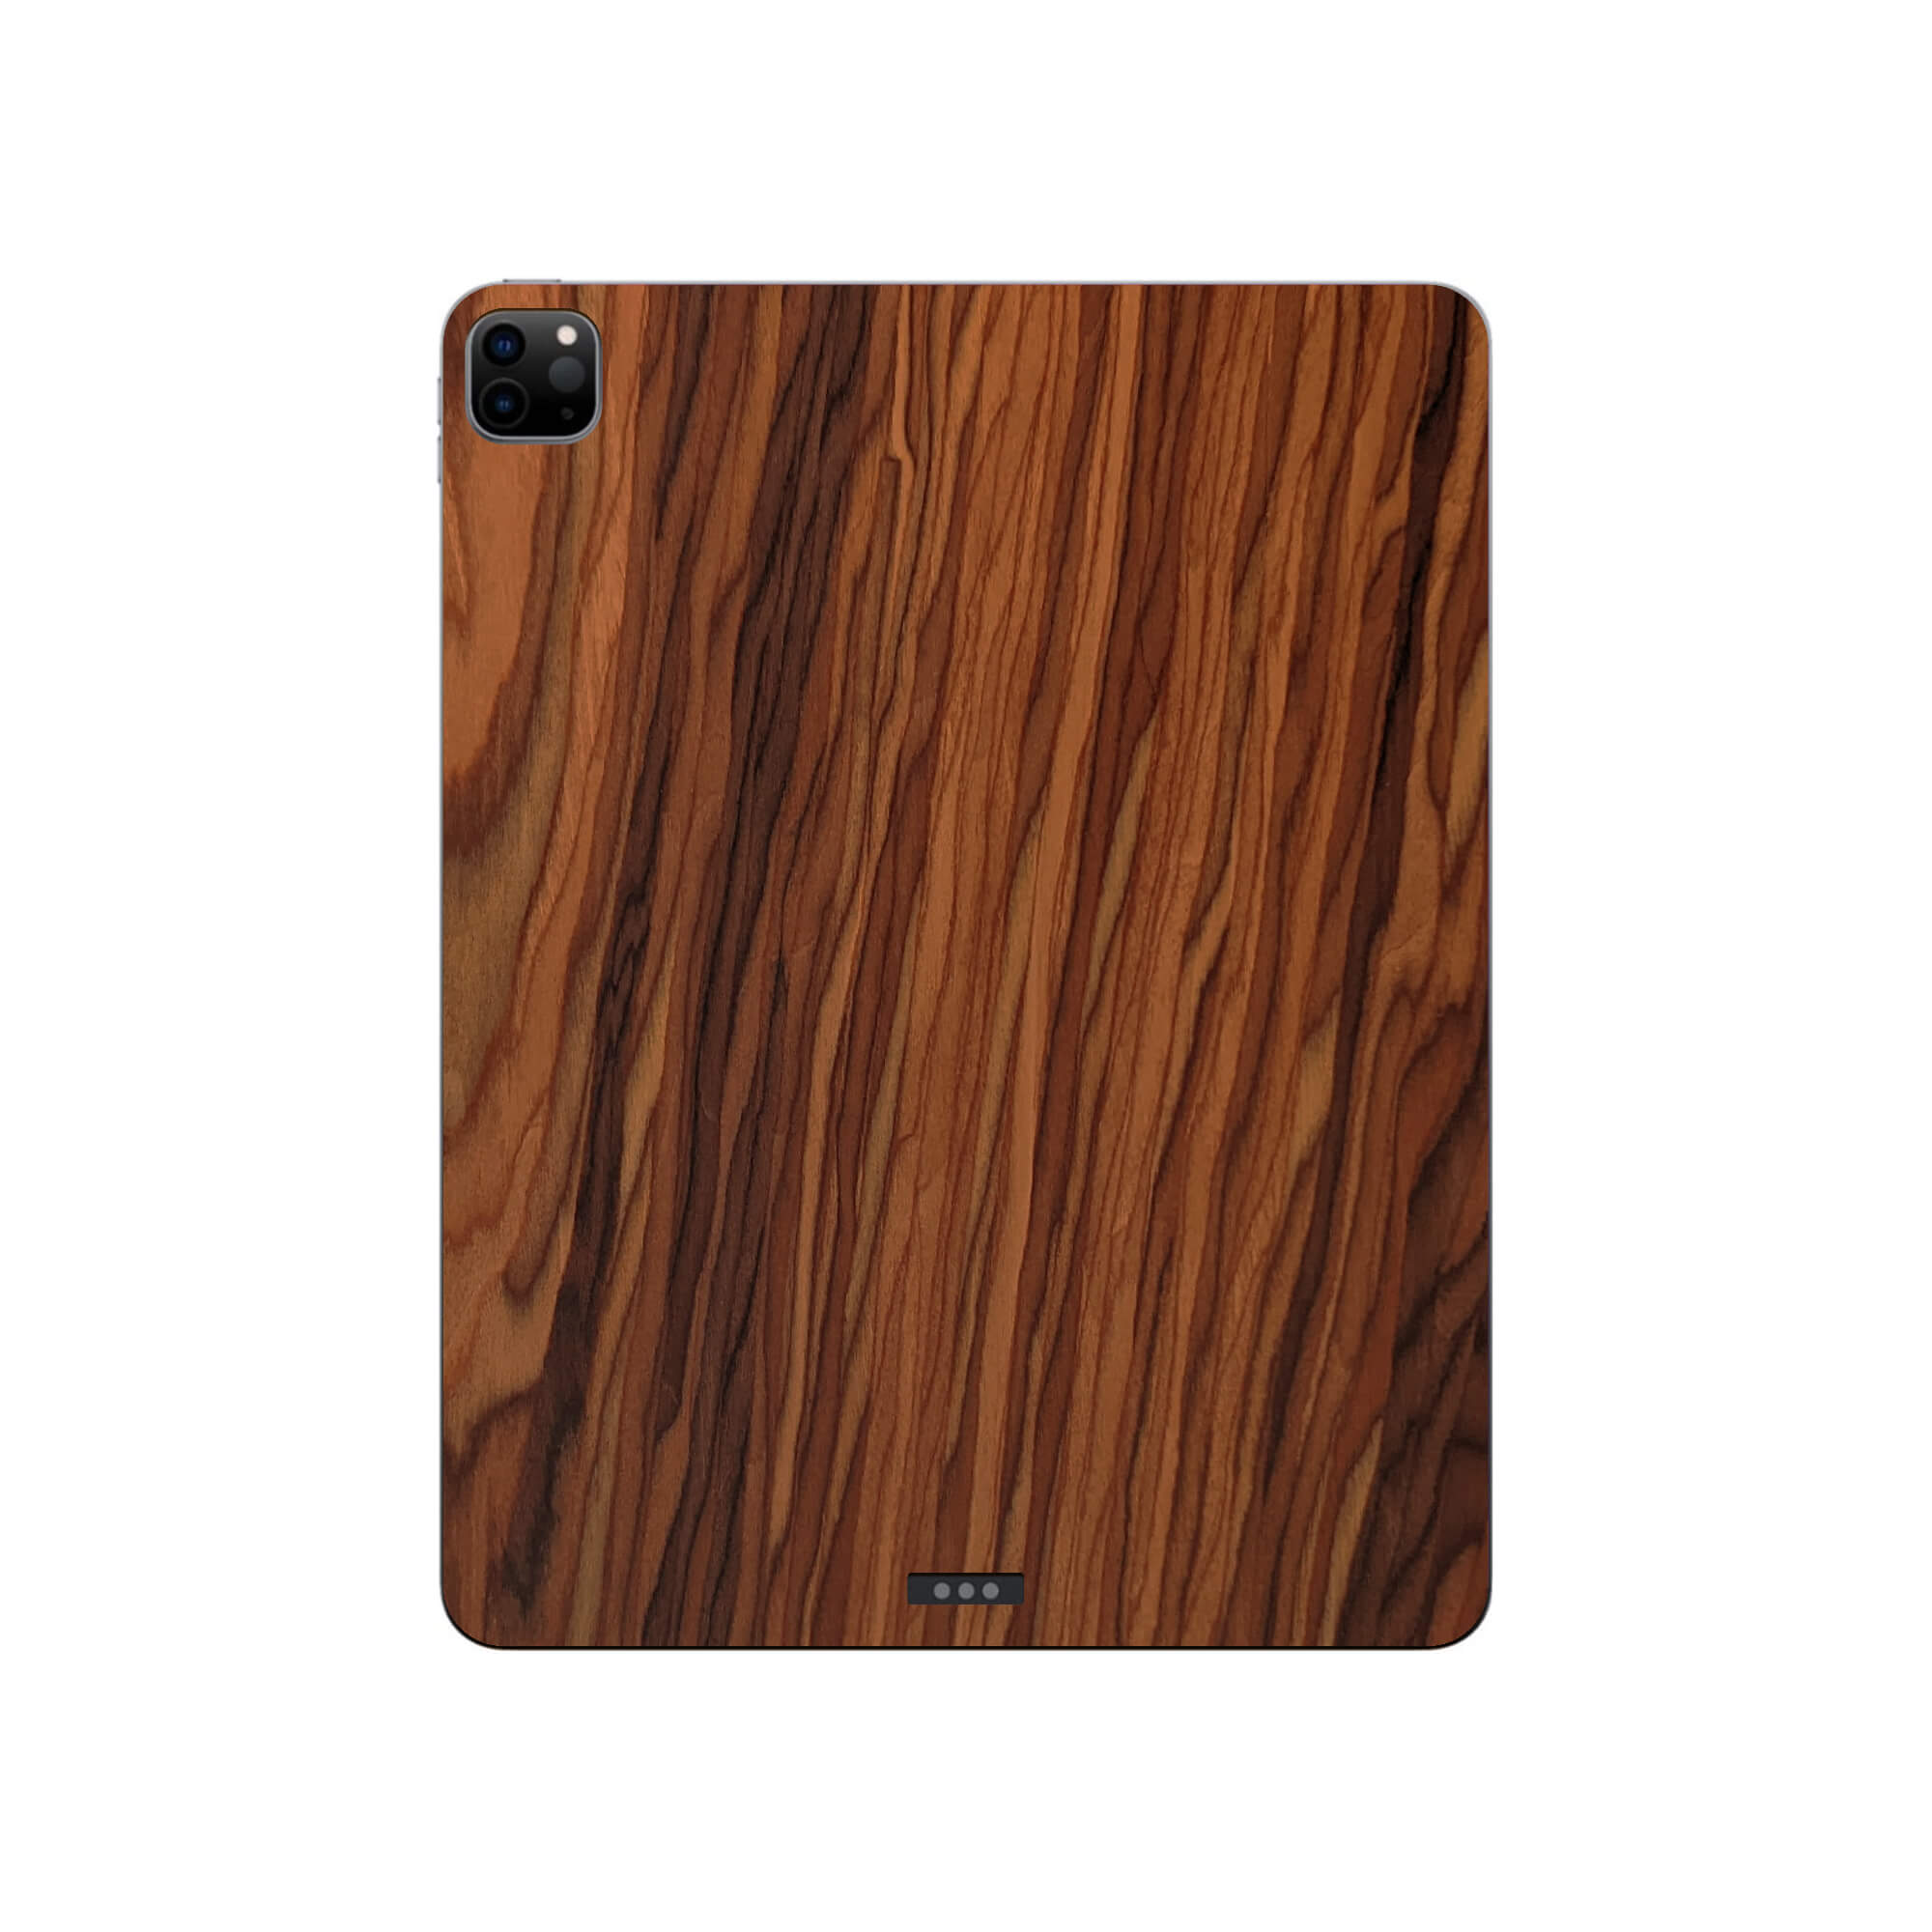 z(DEV TEST) -  iPad Wood Skin